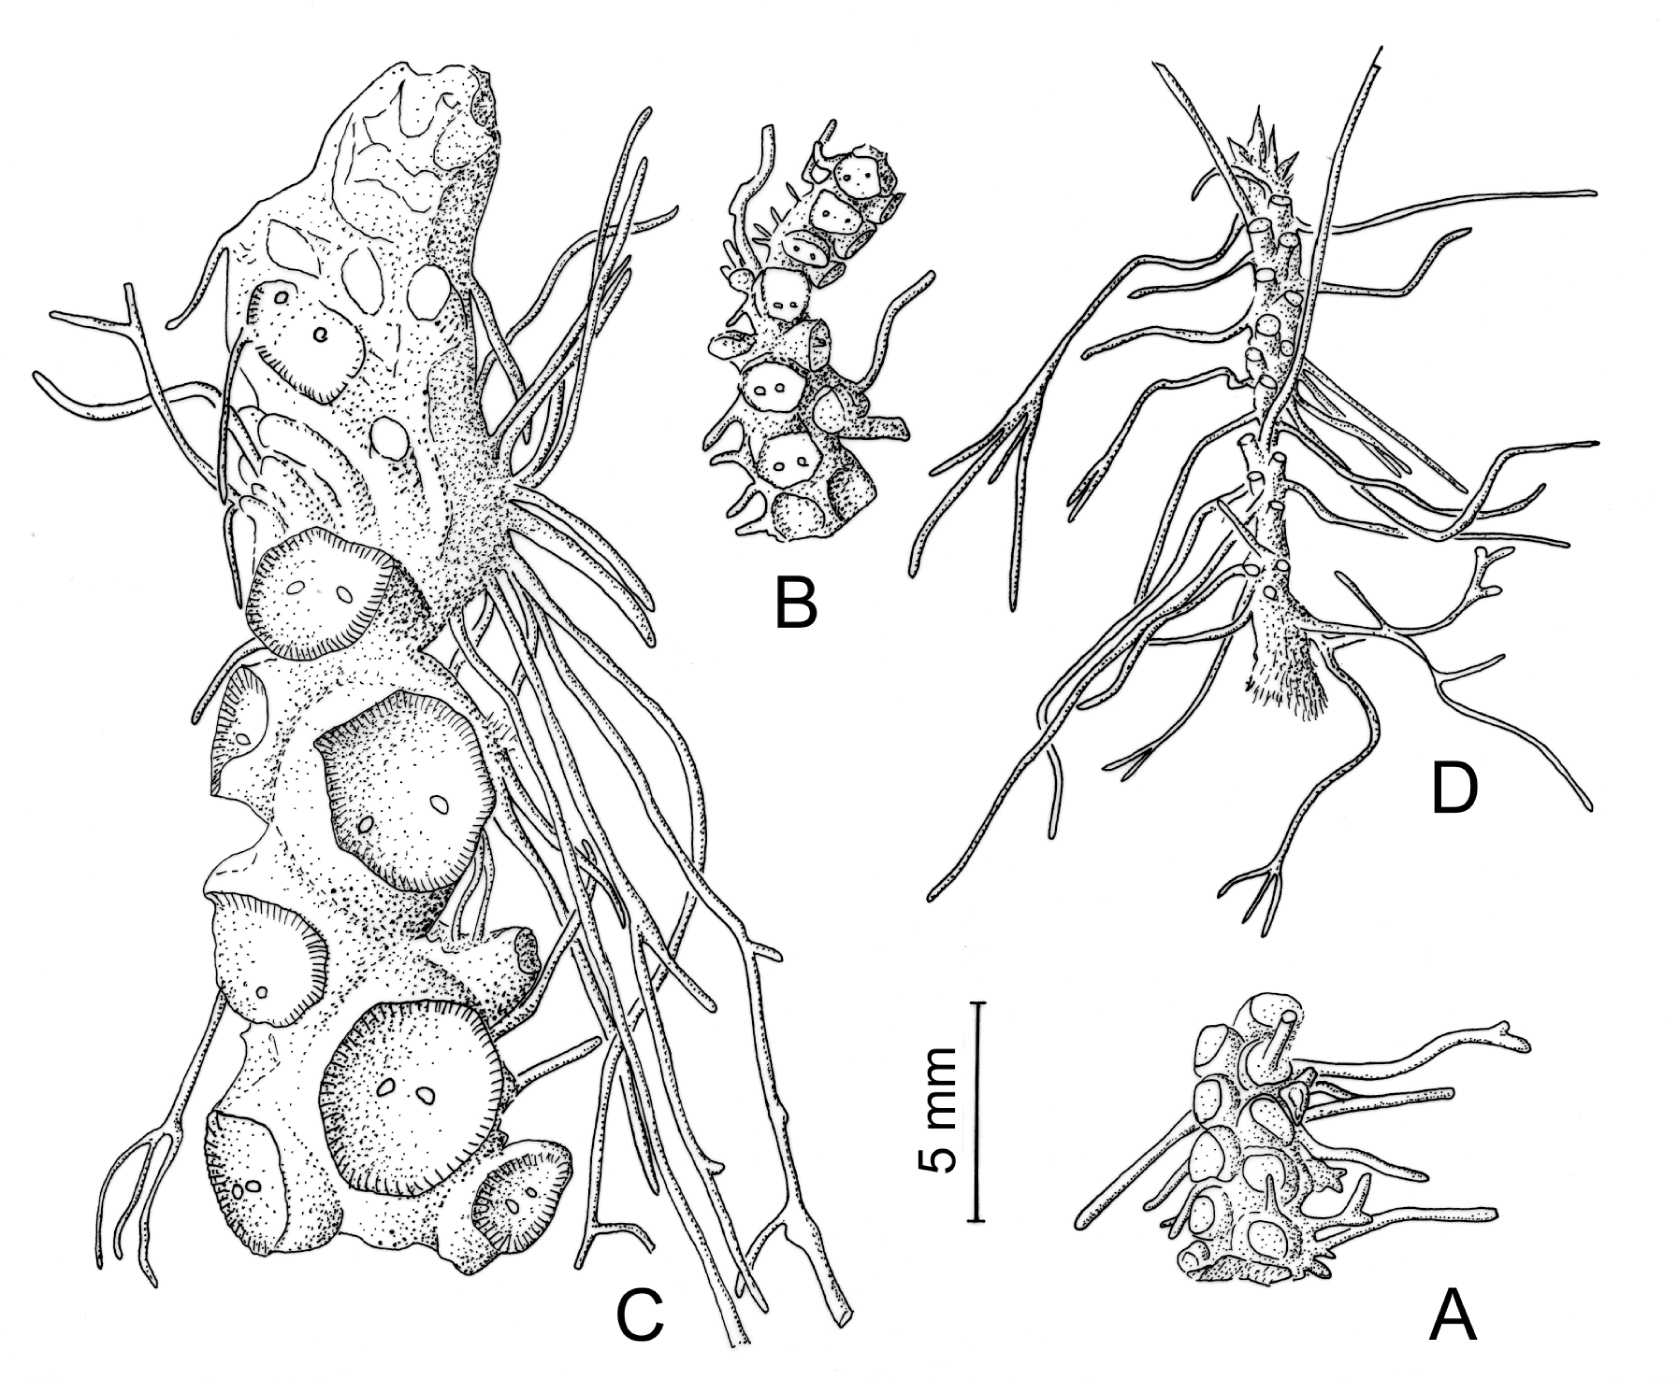 Fig. 1. External rhizome morphology (dorsal view): A – Ceradenia alboglandulosa; B – C. deltodon; C – Zygophlebia humbertii; D – Z. torulosa.